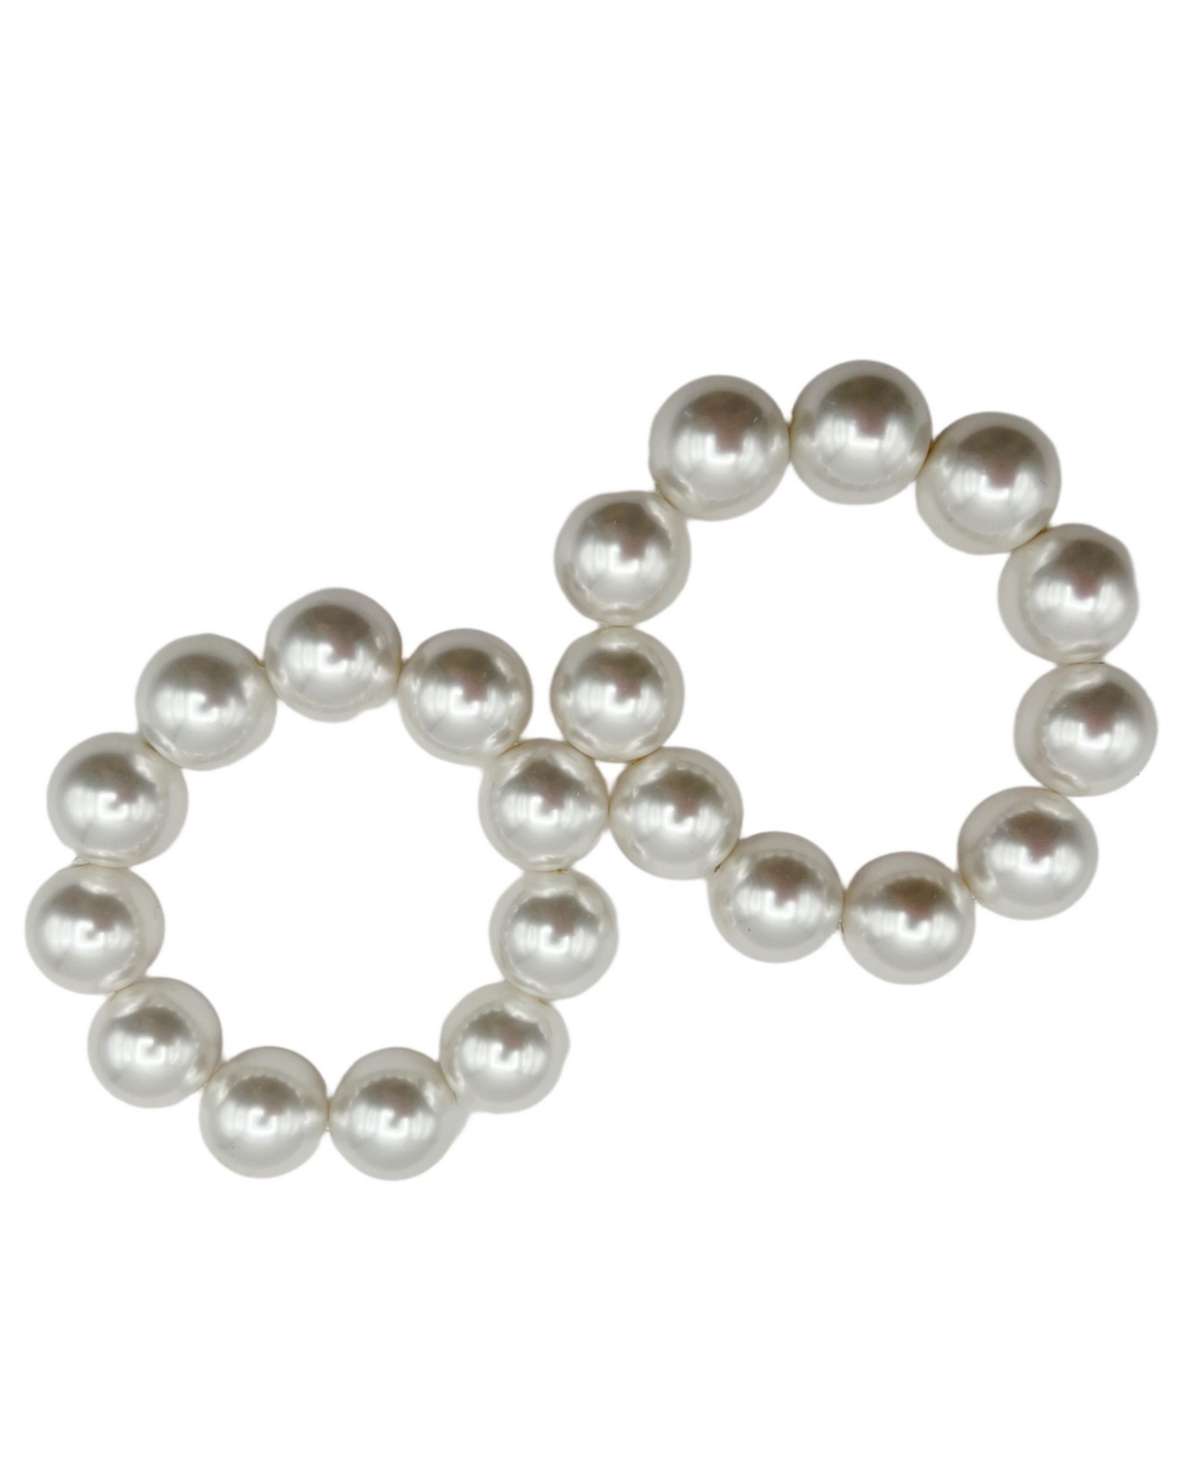 2-Pc. Set Imitation Pearl Stretch Bracelets, Created for Macy's - Faux Glistening White Stack Bracelets